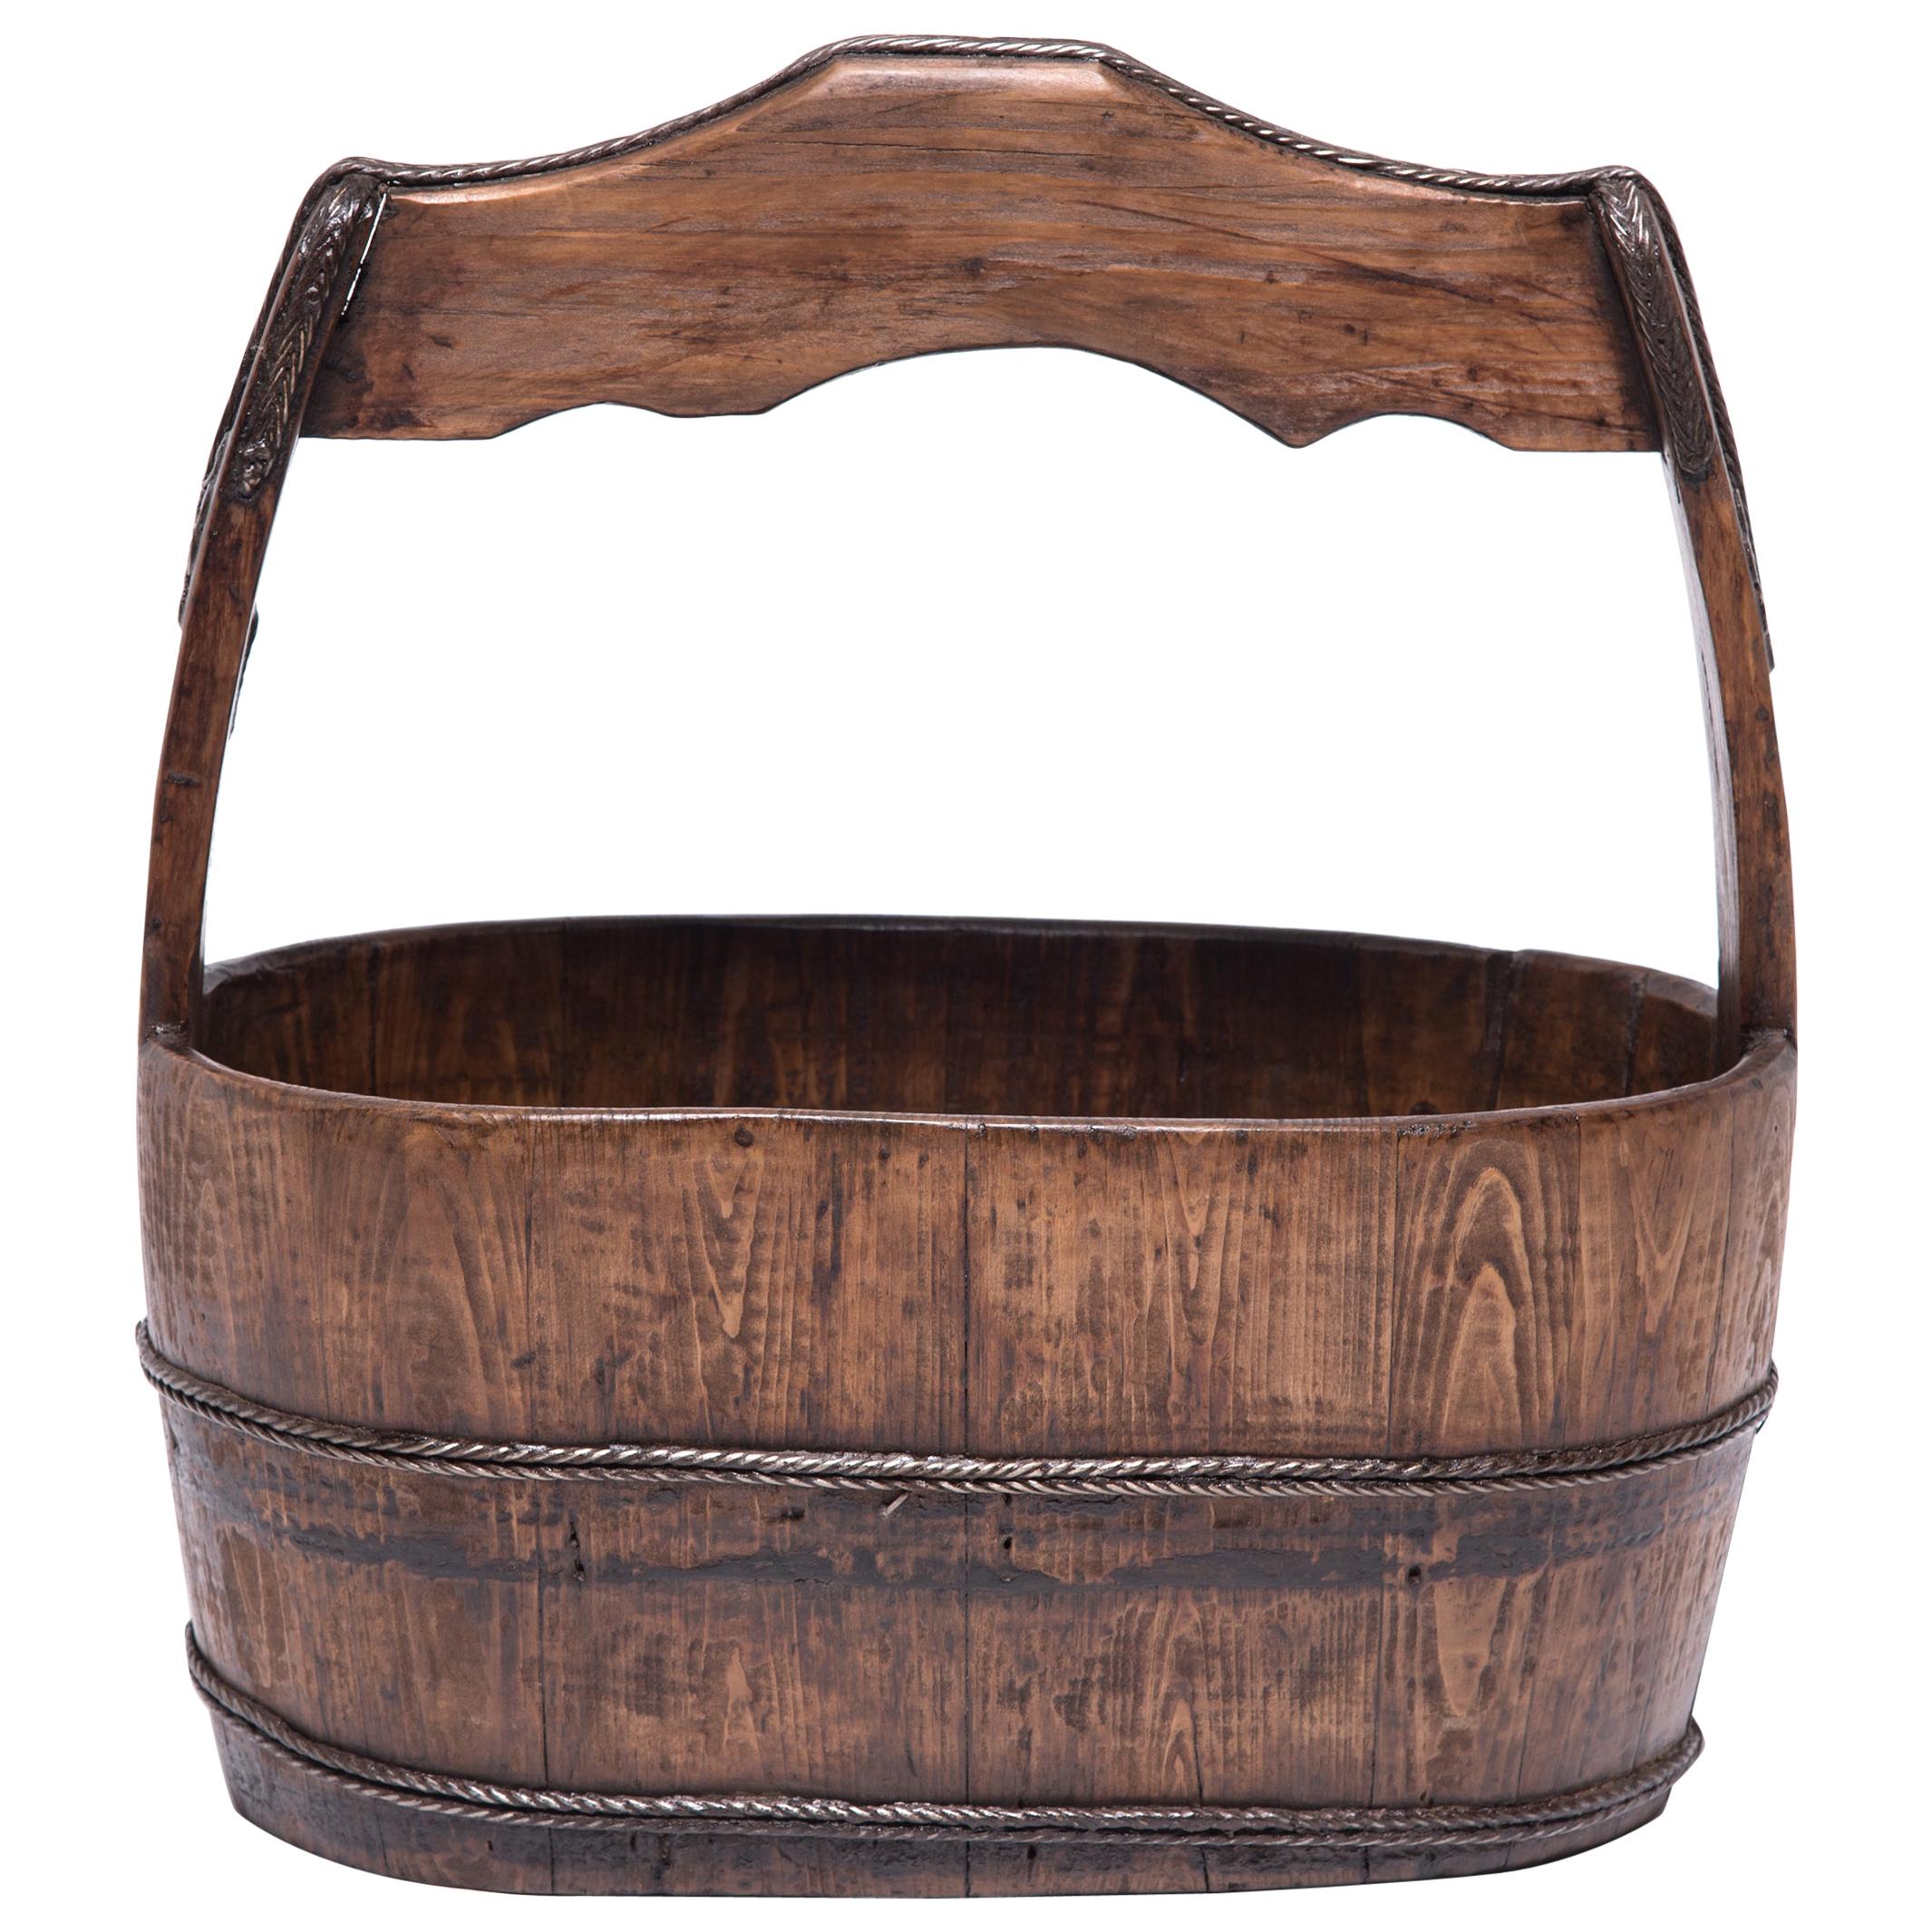 Provincial Chinese Burden Basket, circa 1900